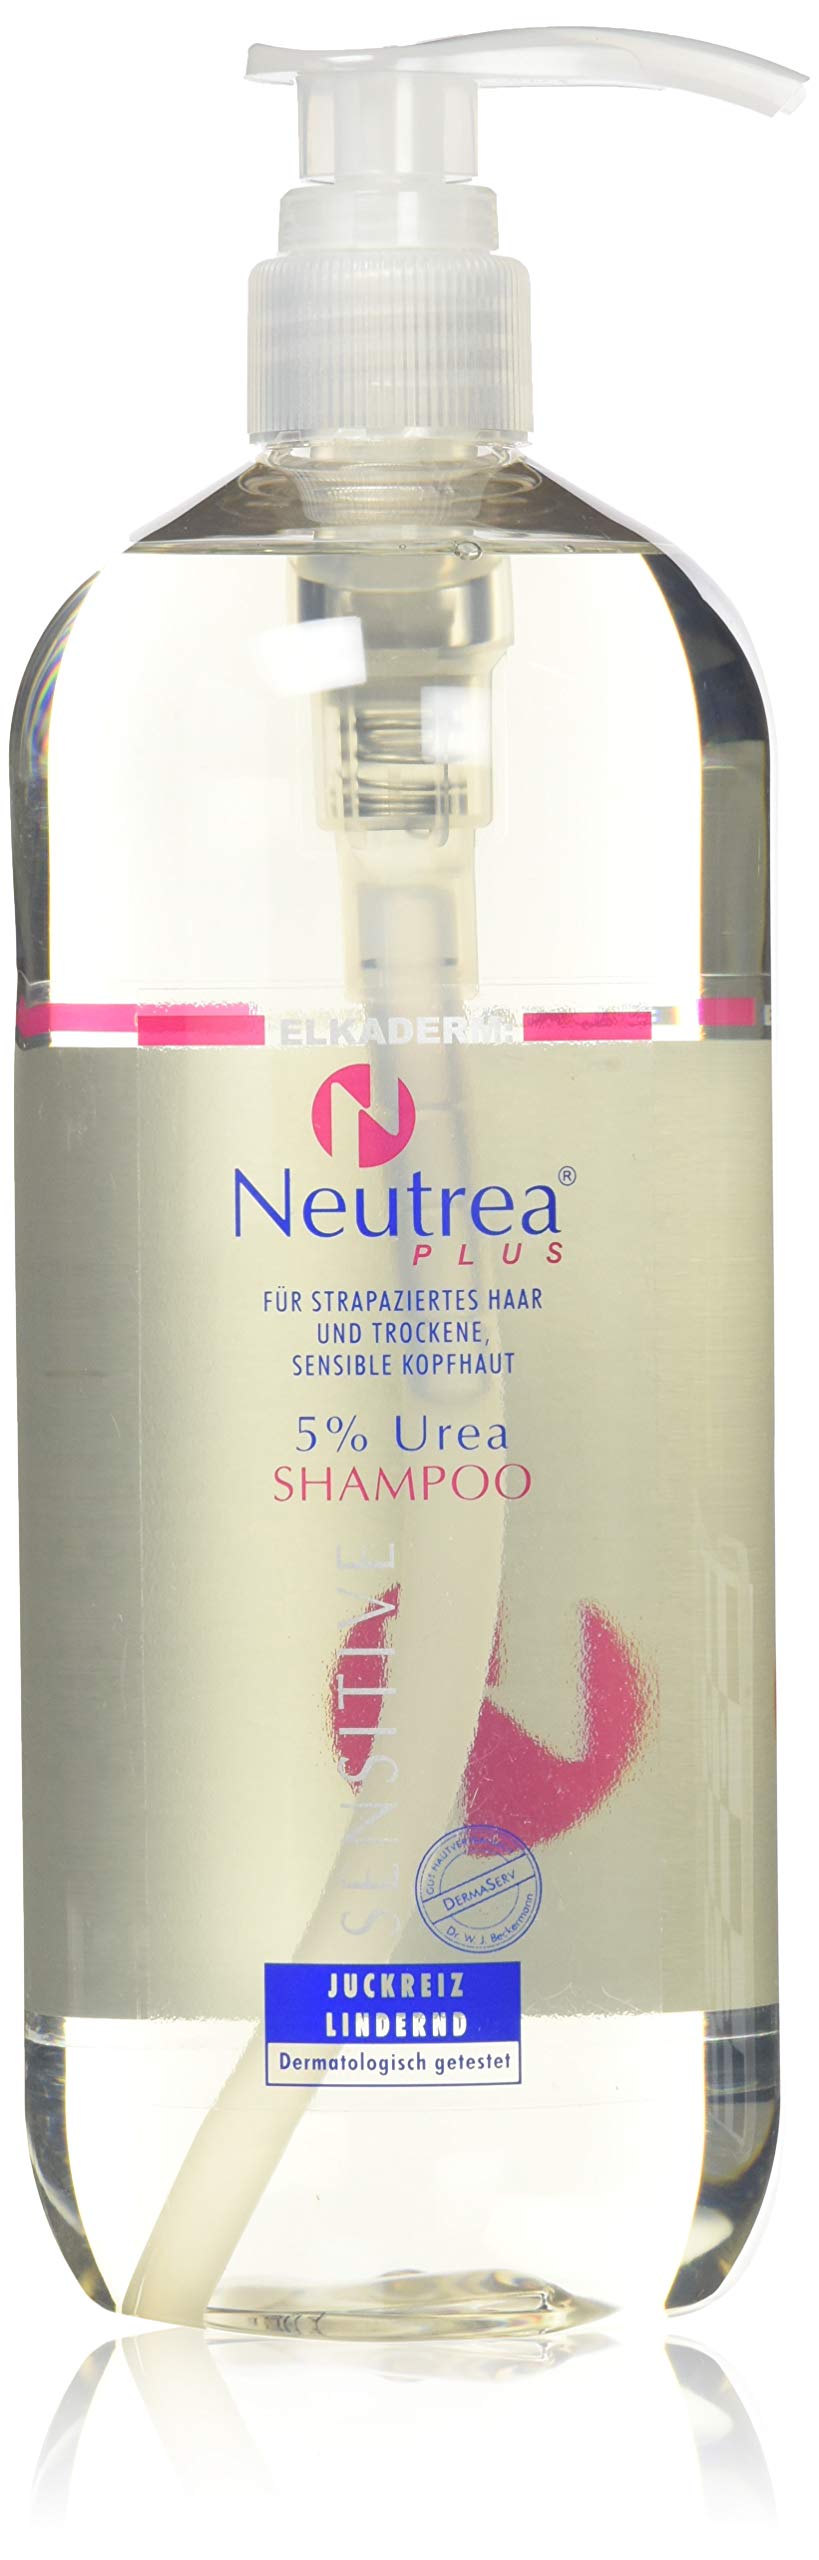 Elkaderm Neutrea Plus 5 prozent Urea Shampoo, 1000 ml, Unparfümiert